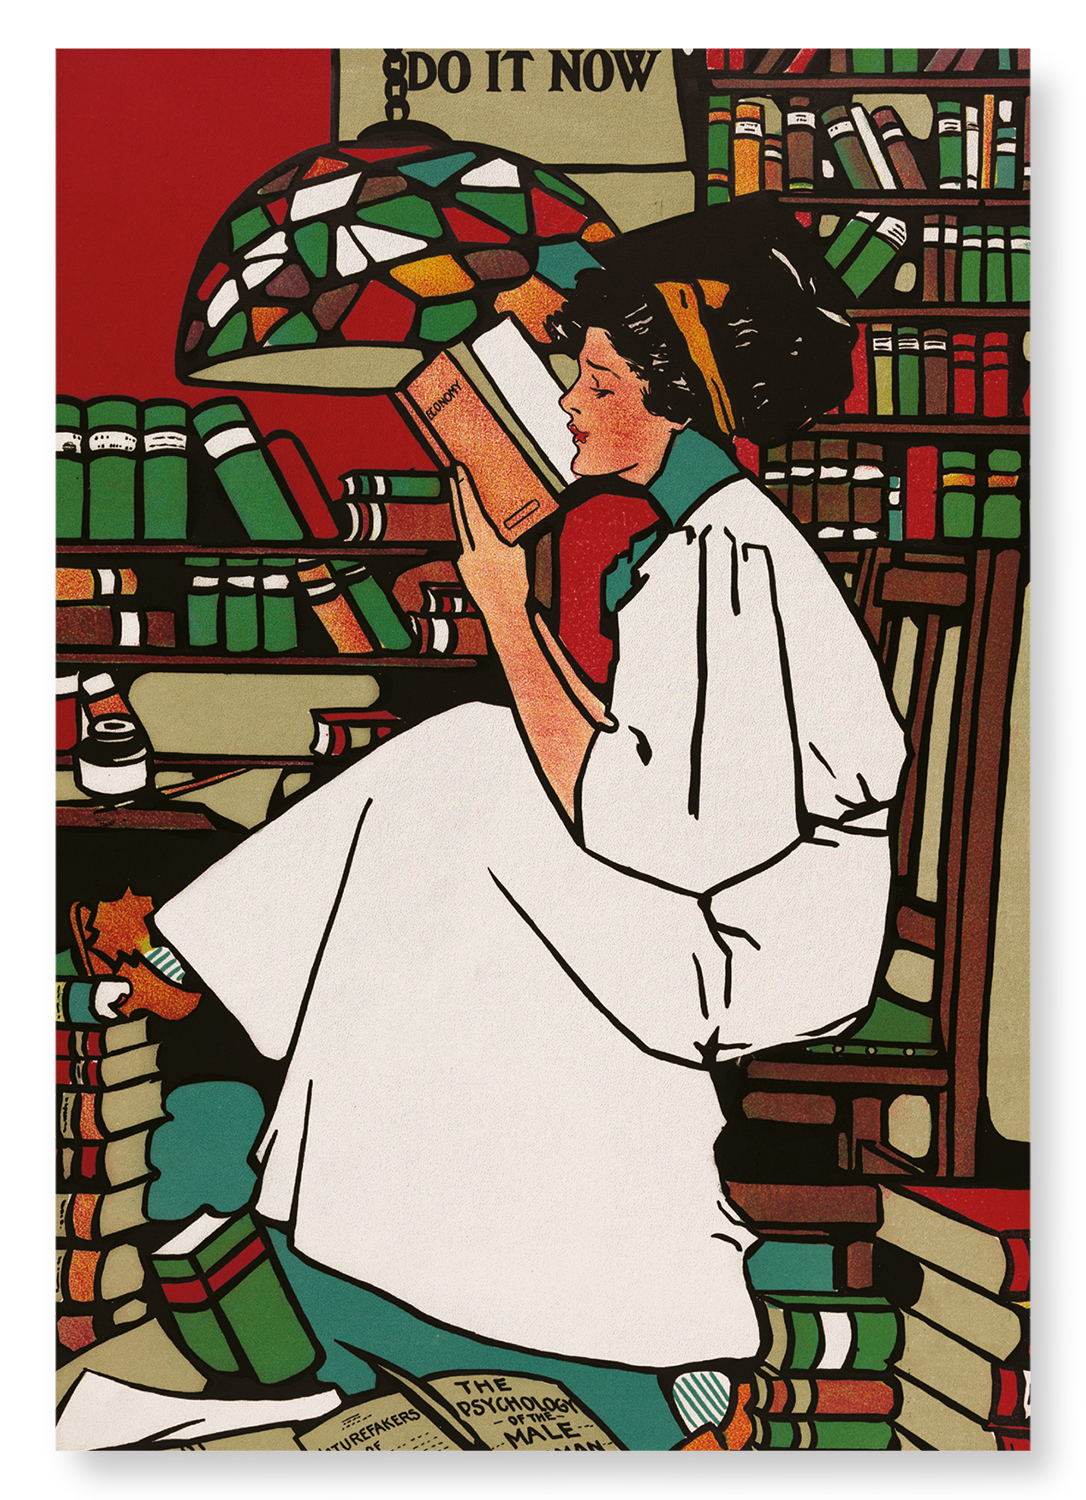 BOOK READING (1909)